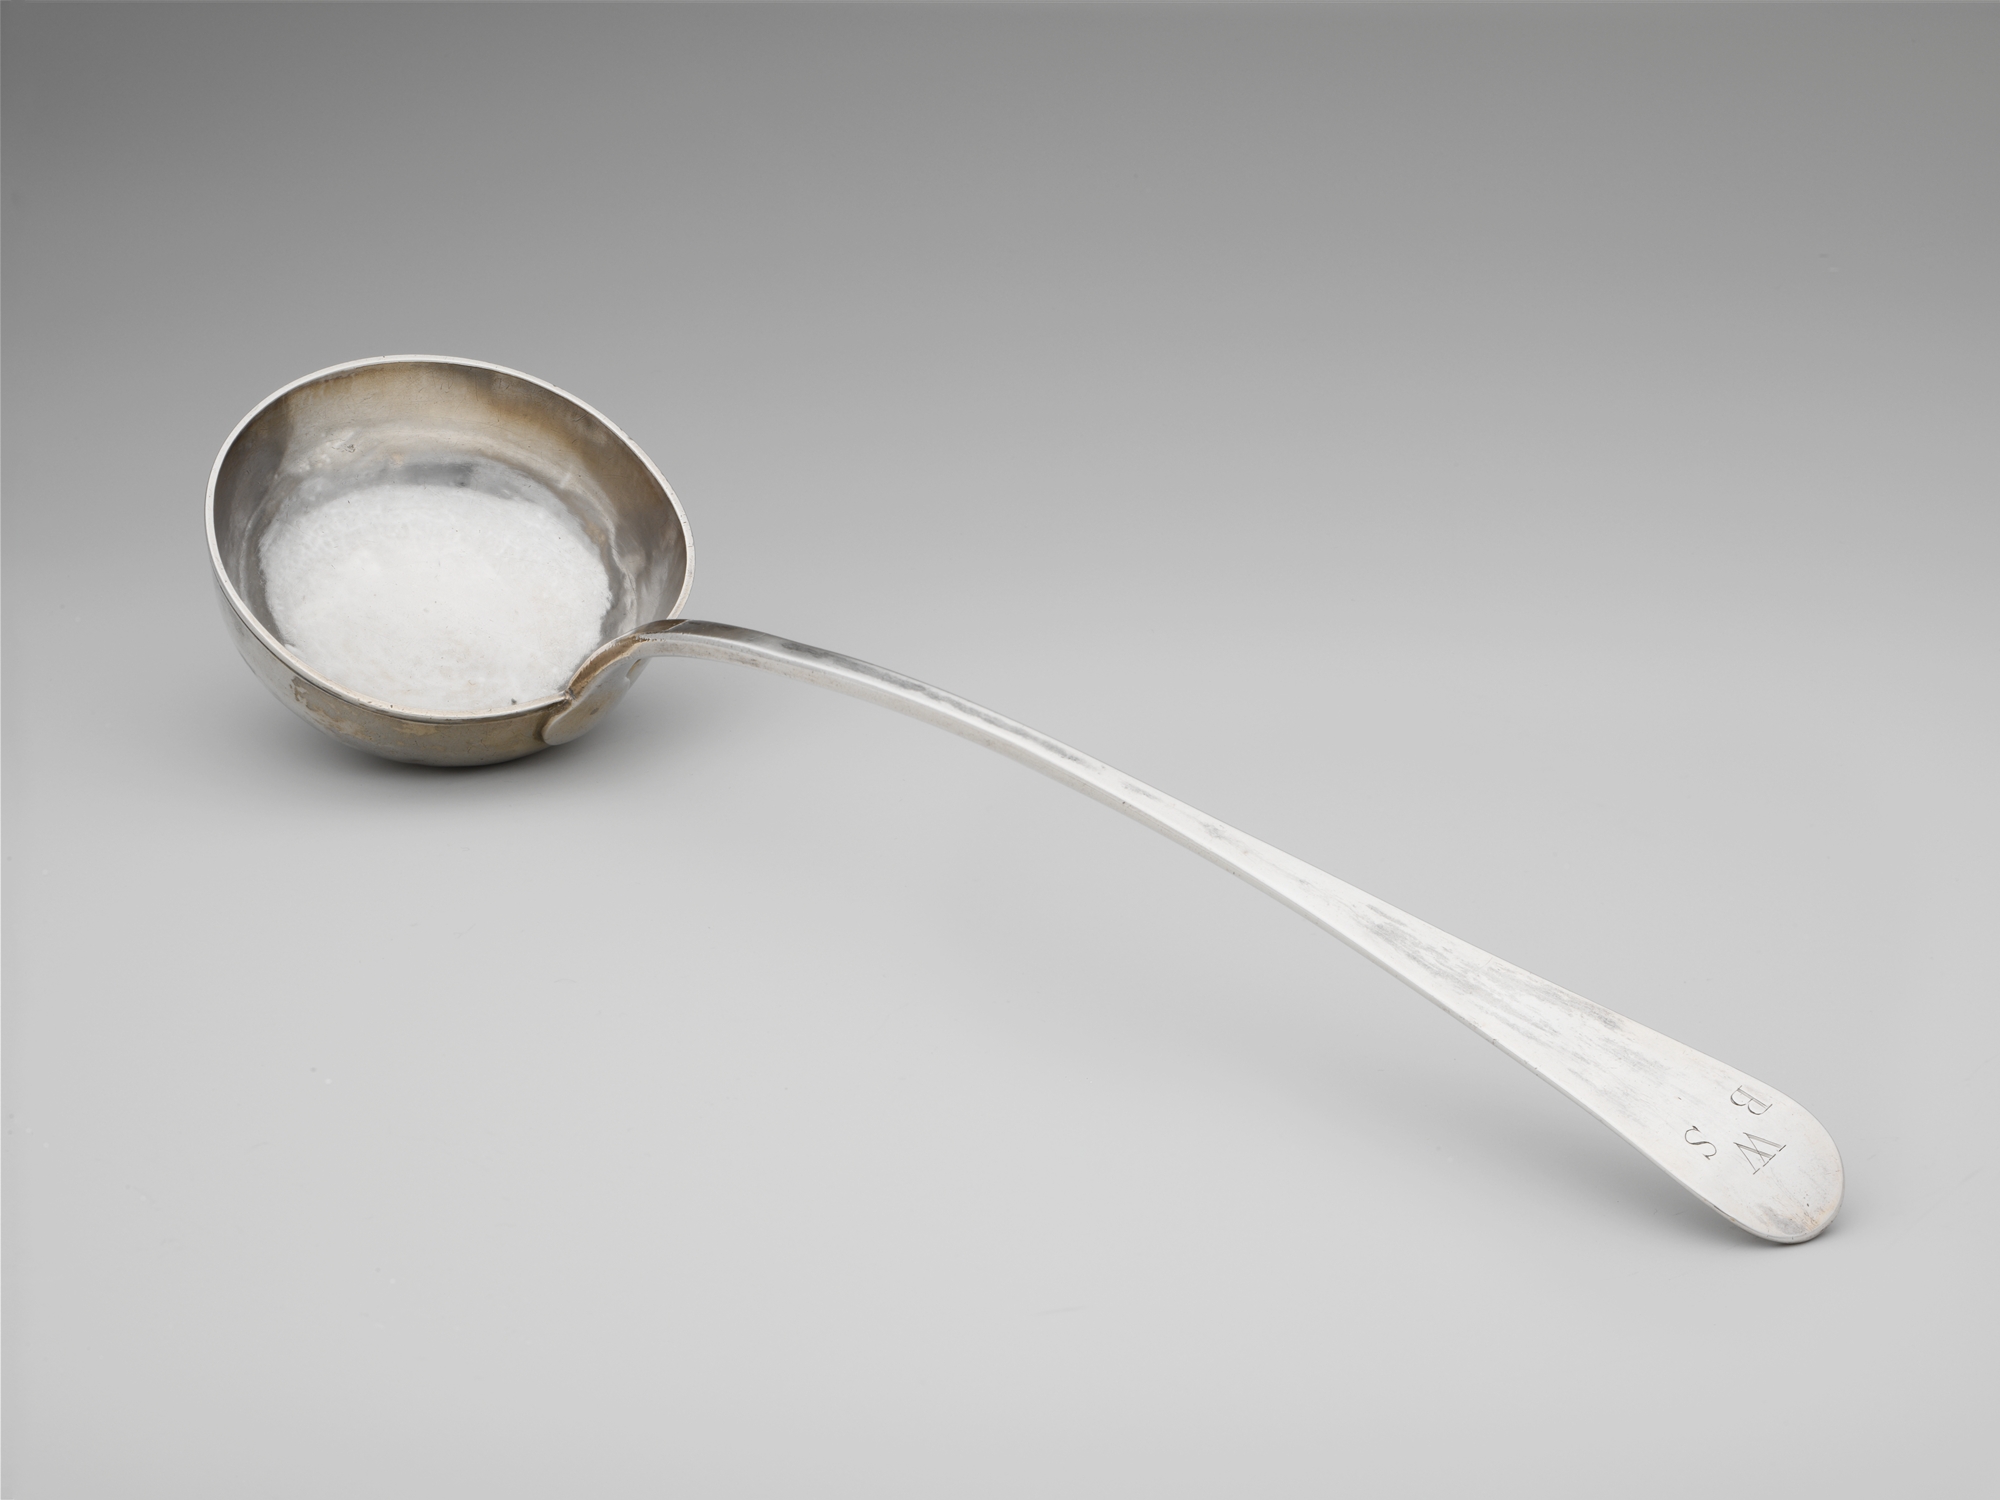 Ladle (spoon) - Wikipedia